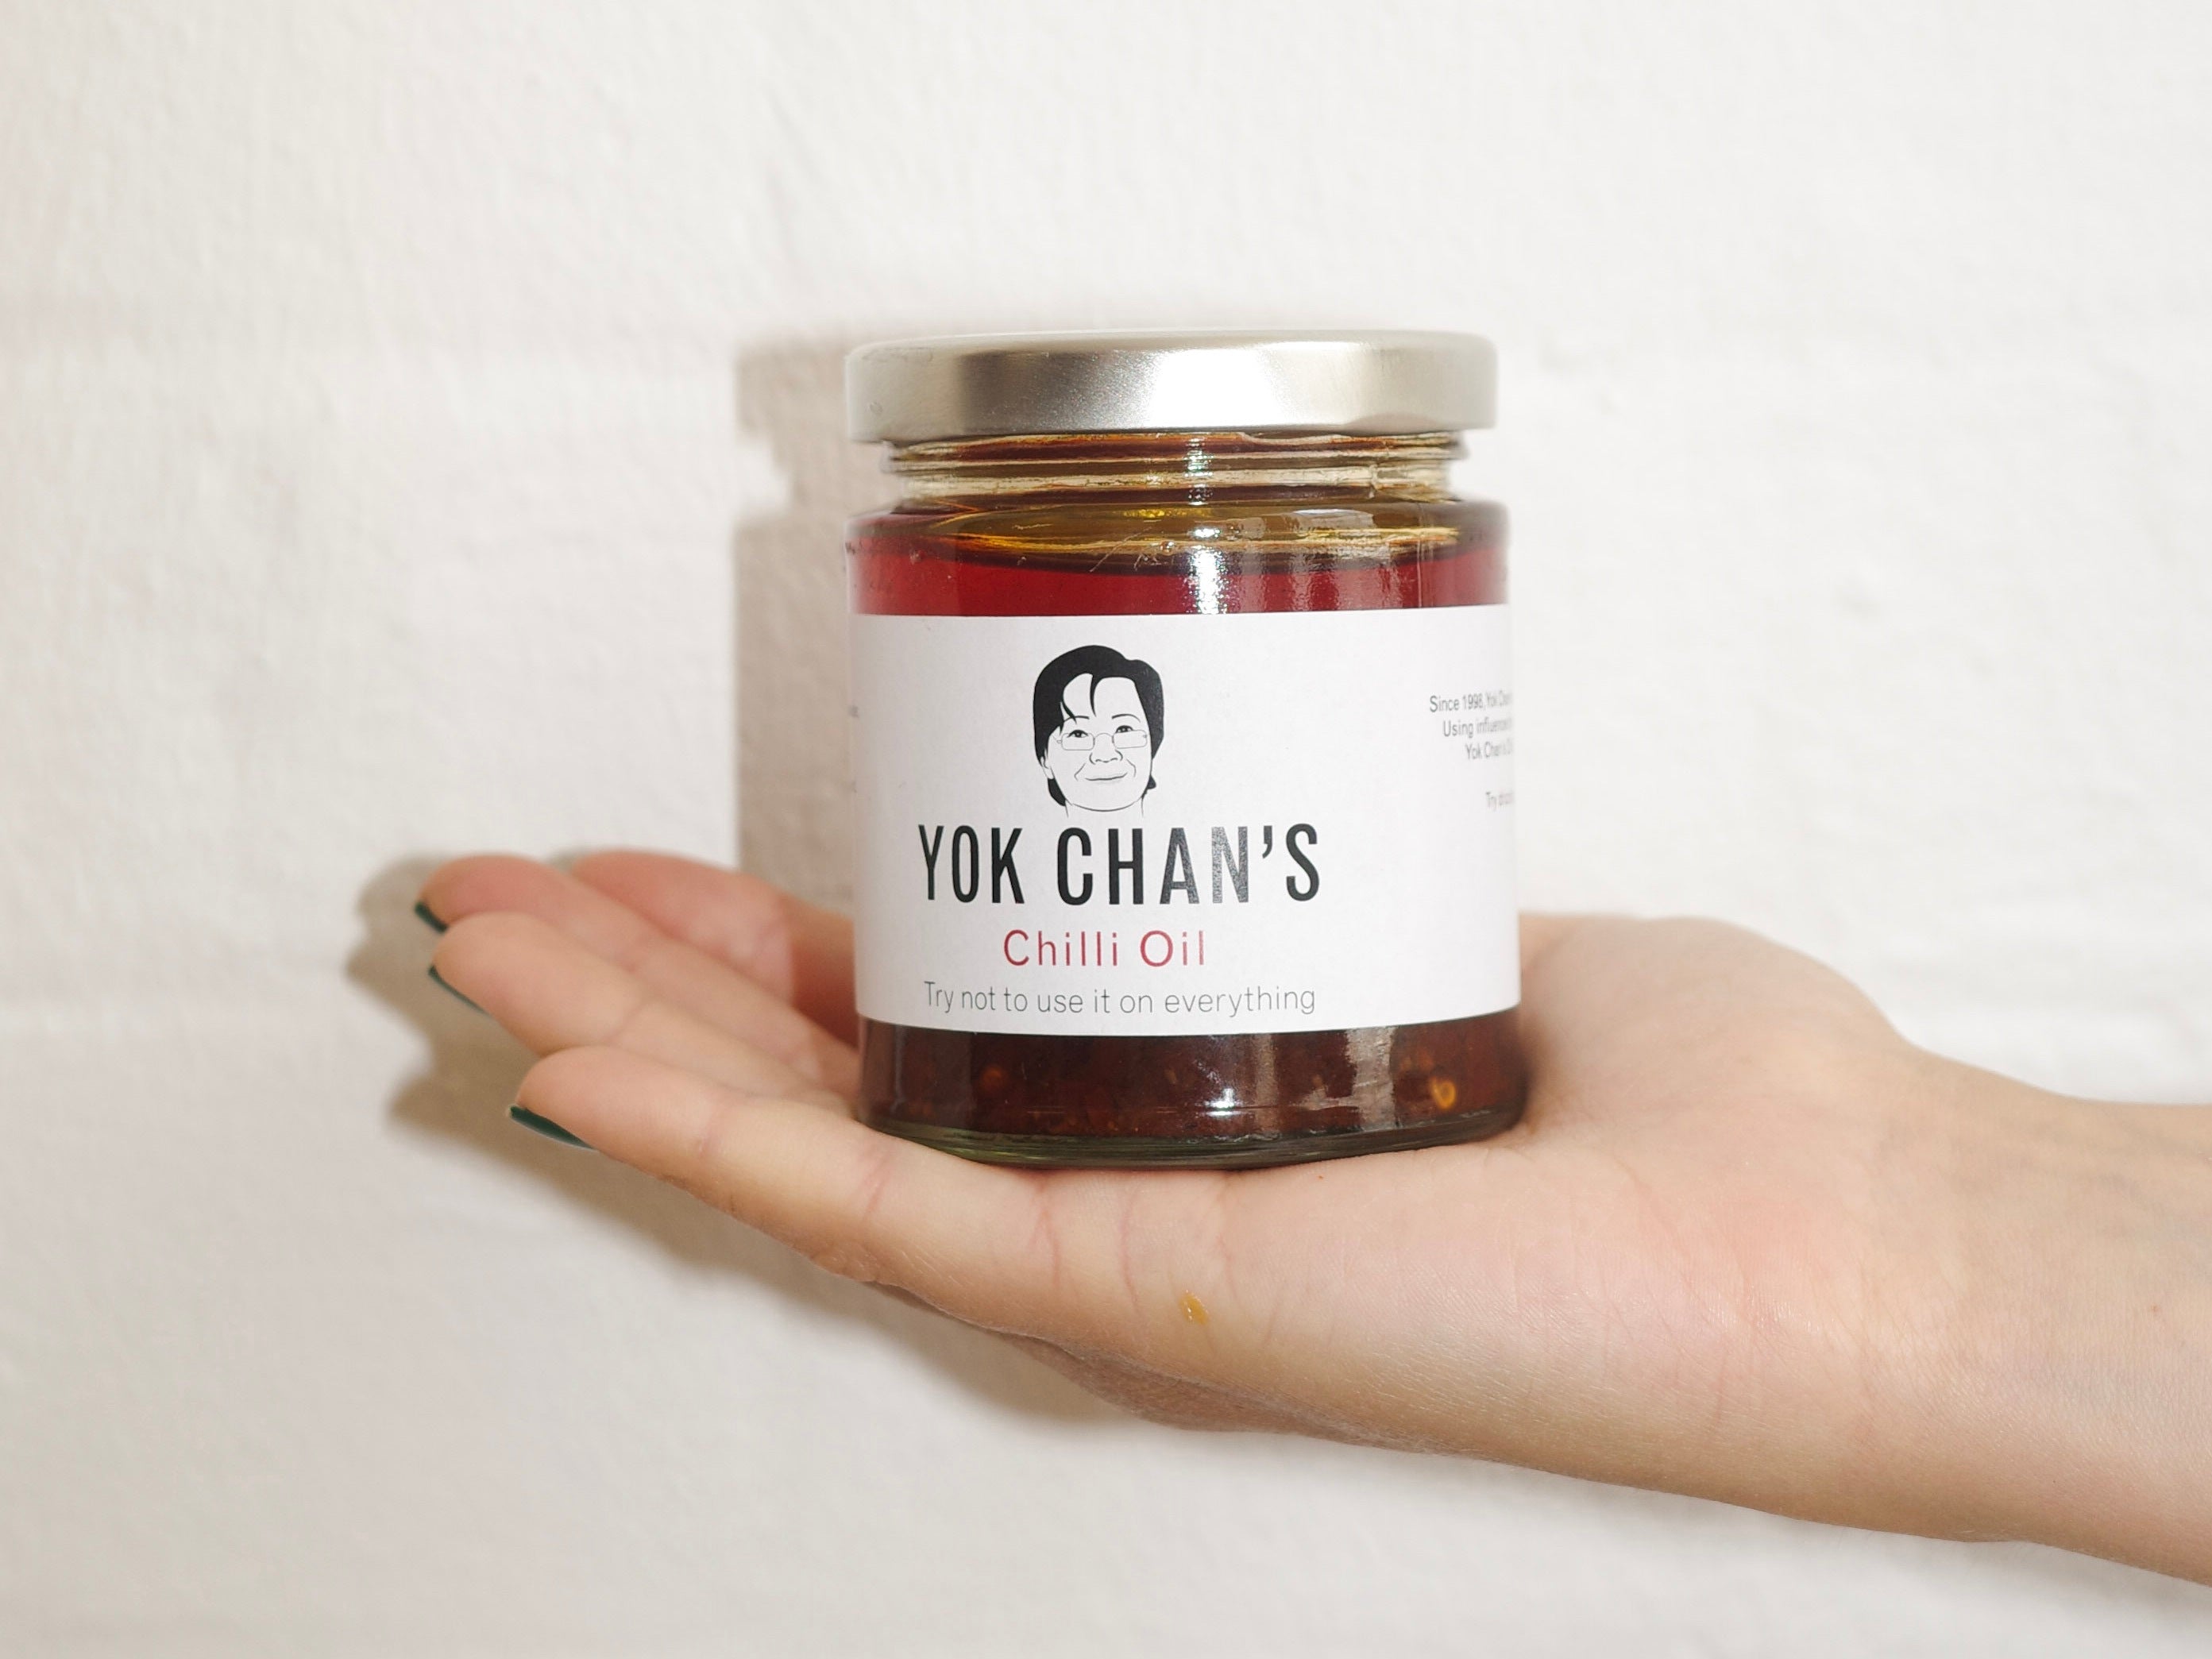 Yok Chan's Chilli Oil